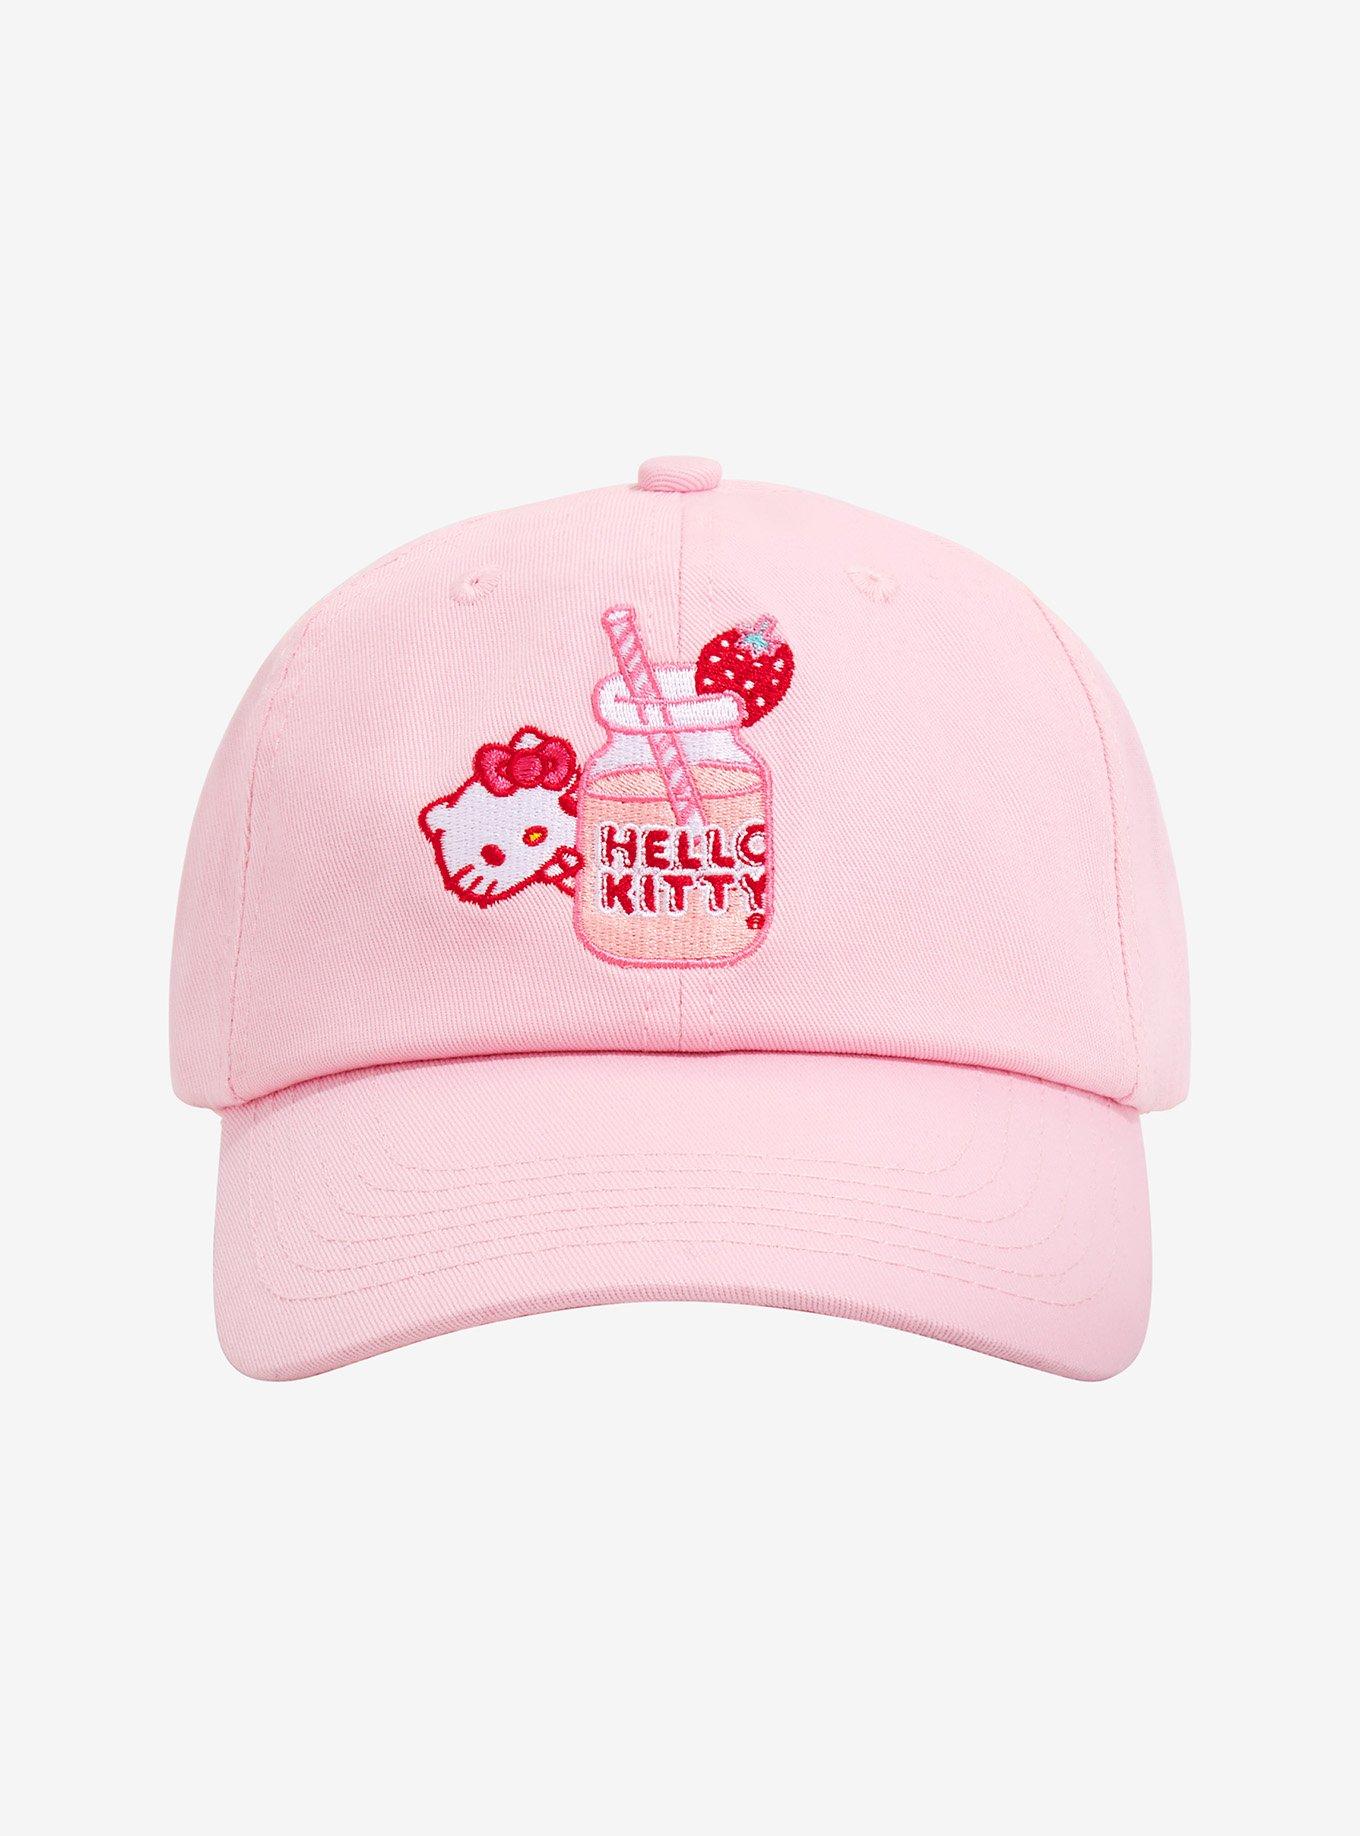 Hello Kitty - Strawberry - Fotorahmen - Spiegel Fotorahmen - 22,8x17,8